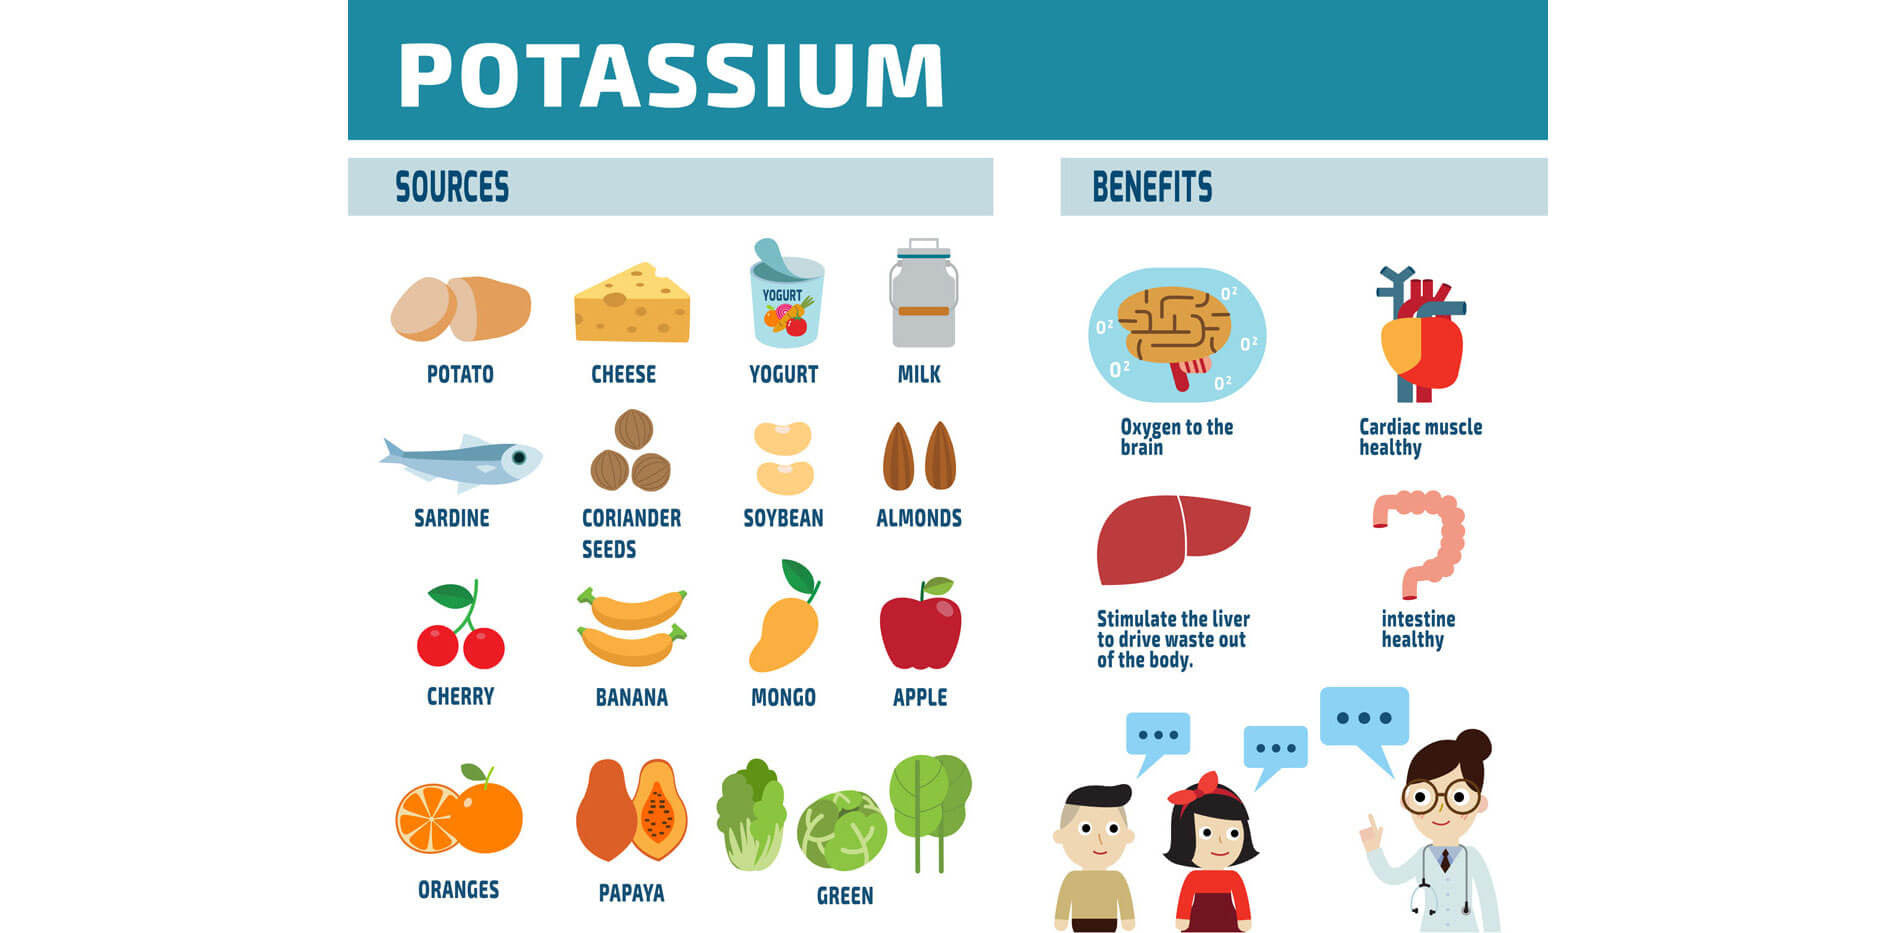 Potassium health benefits